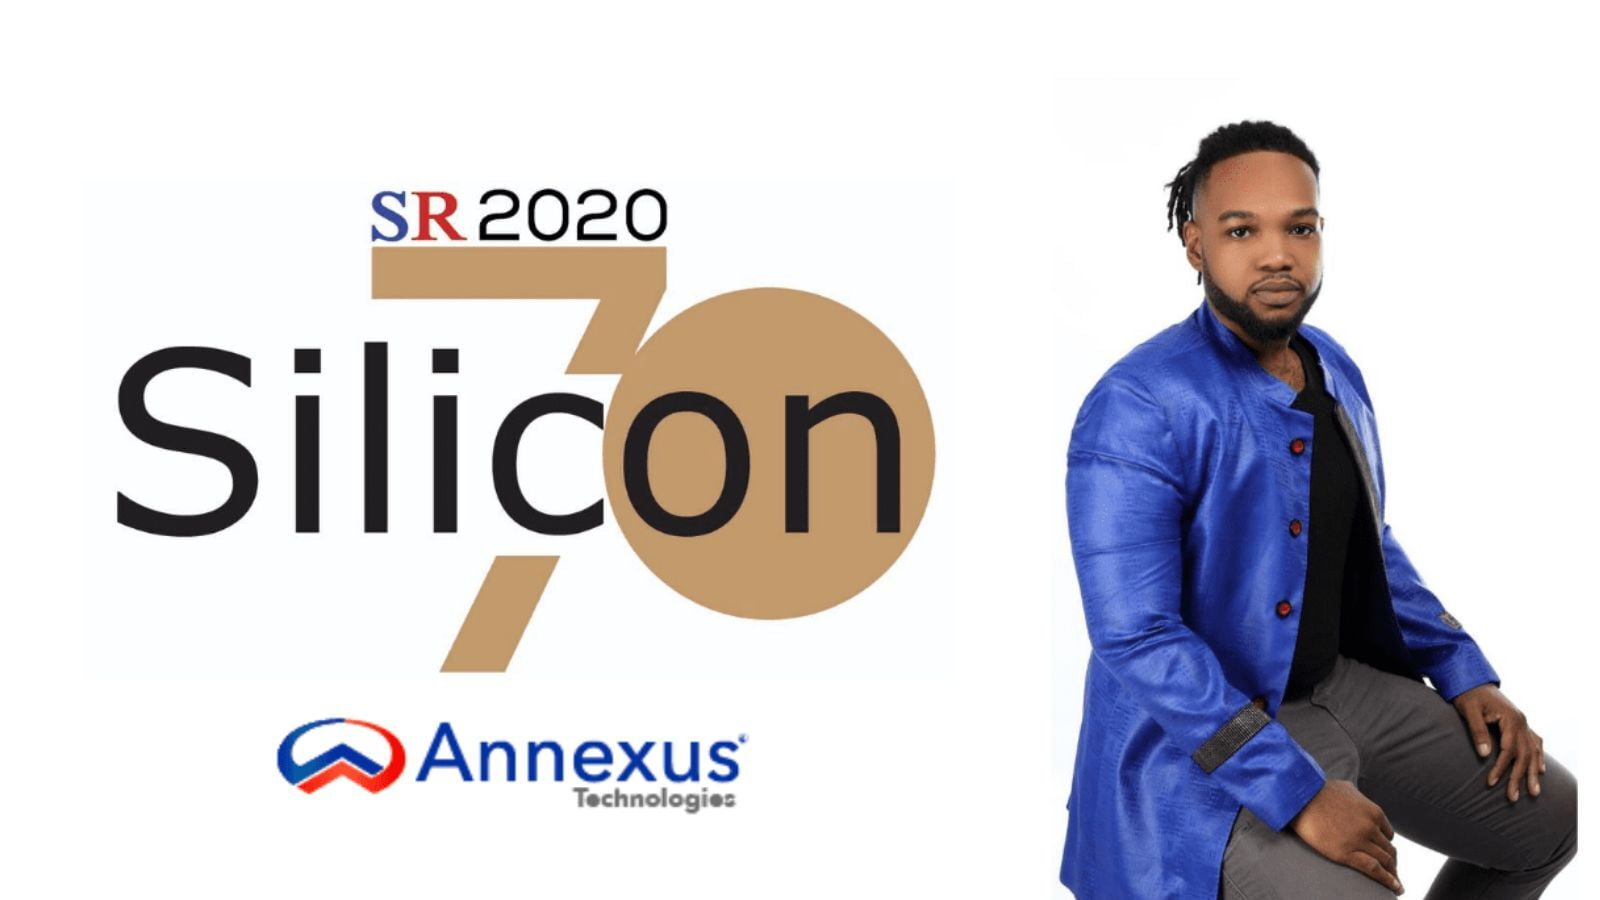 SR 2020 Silicon 70